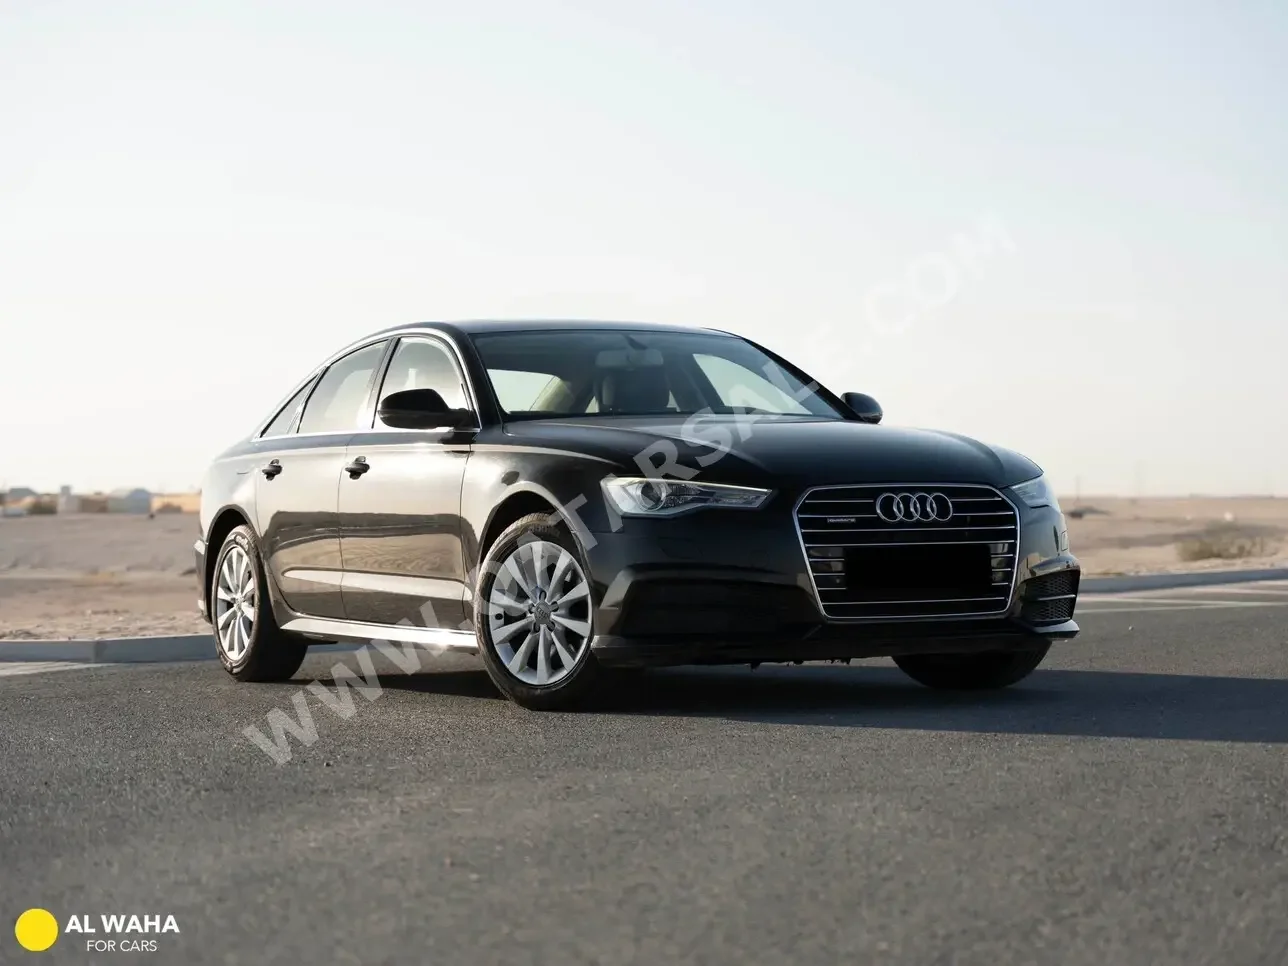 Audi  A6  3.0 S-Line  2018  Automatic  120,000 Km  6 Cylinder  Rear Wheel Drive (RWD)  Sedan  Black